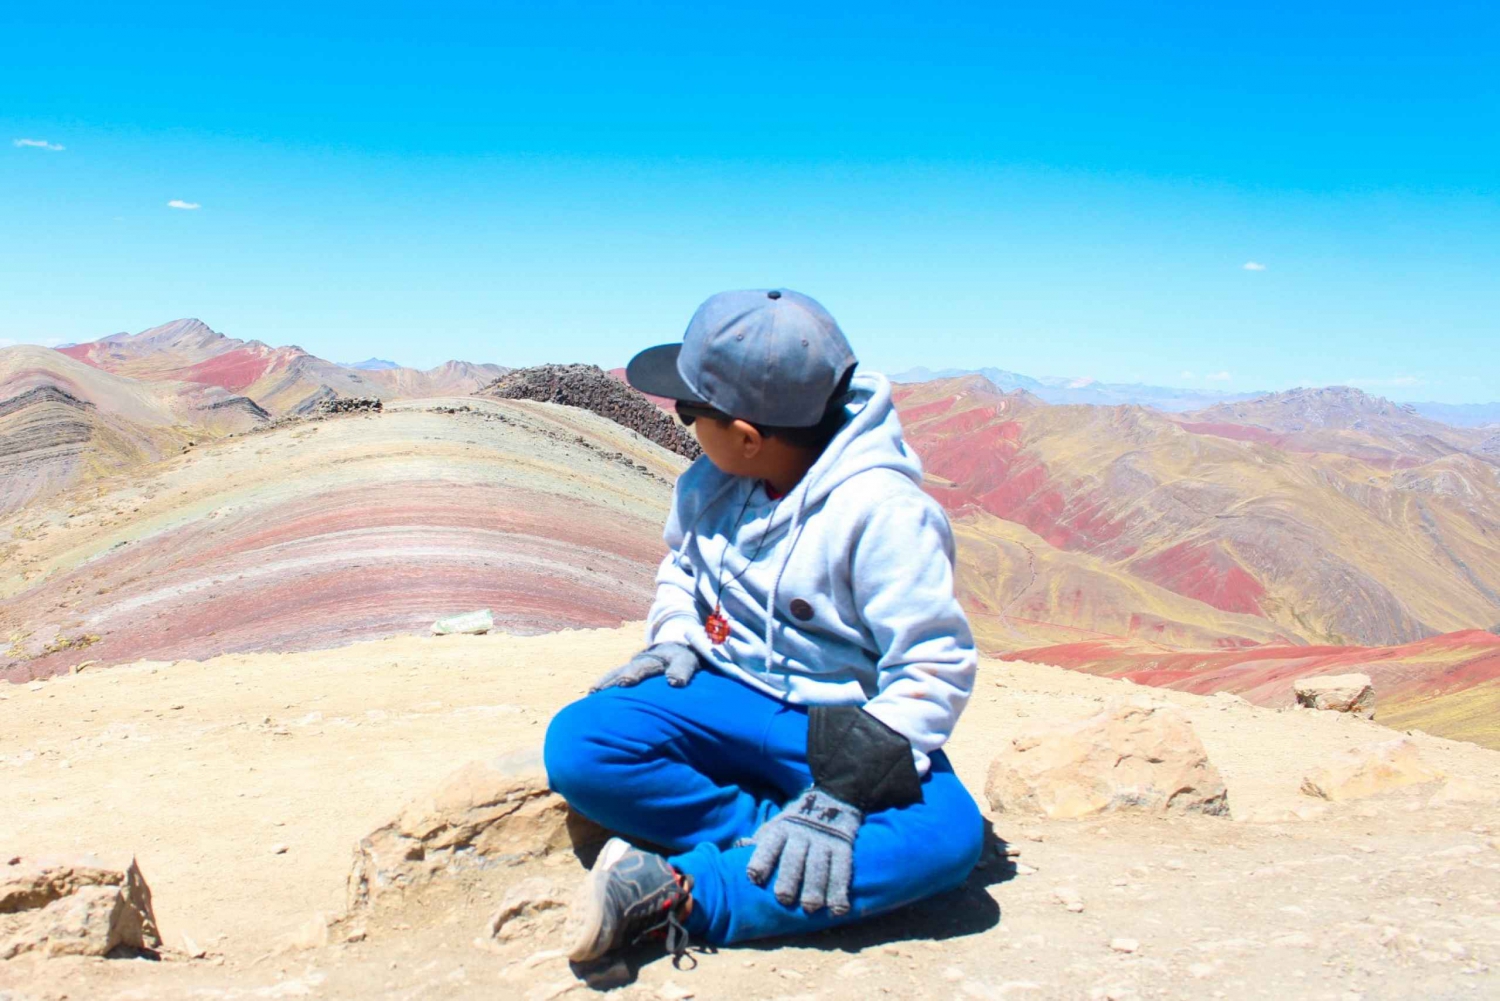 Cusco: Full-Day Palcoyo Rainbow Mountain All-Inclusive Tour